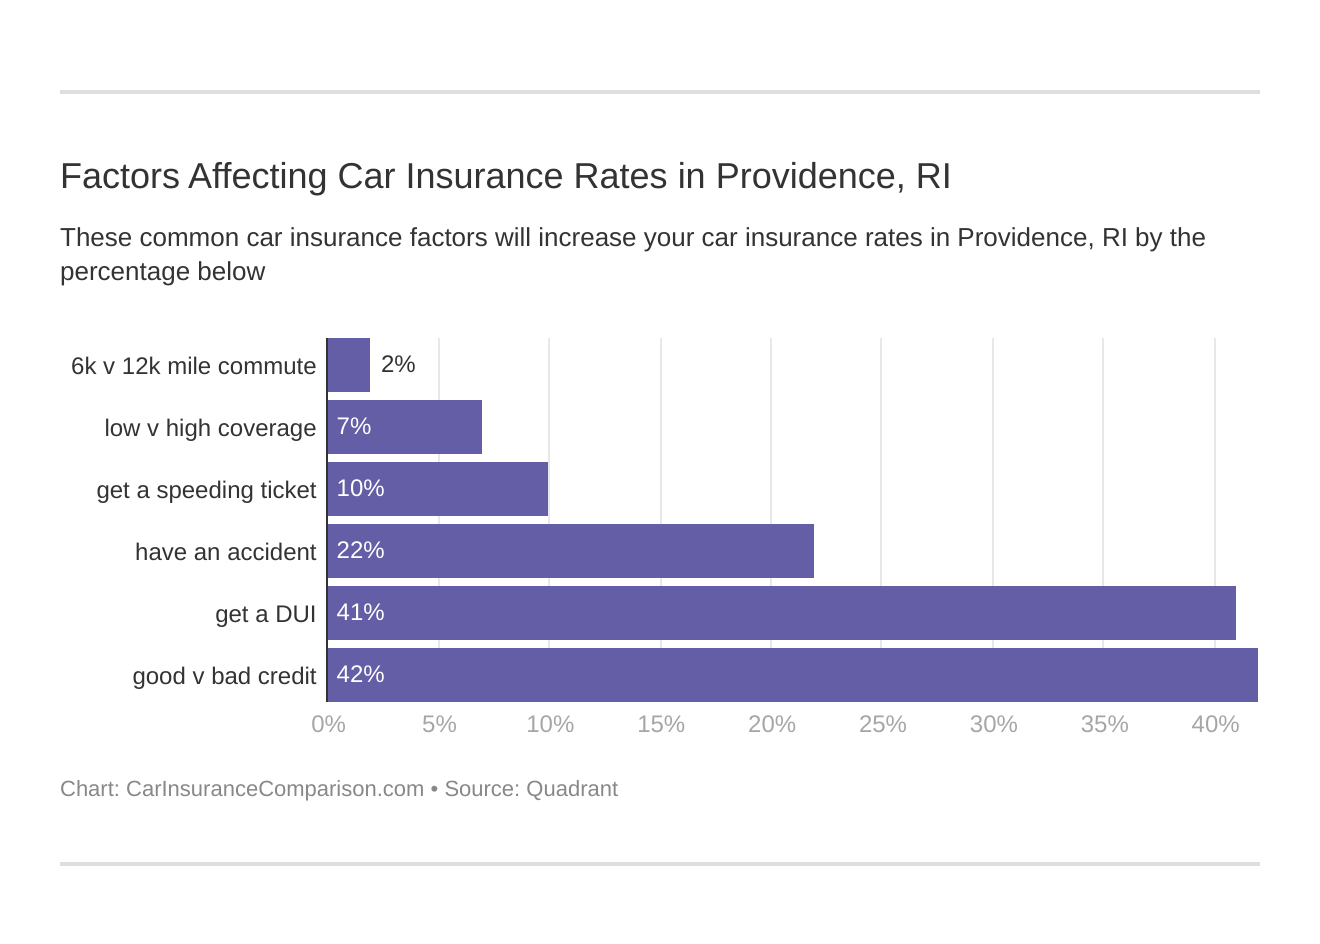 Compare Providence, RI Car Insurance Rates (2021)